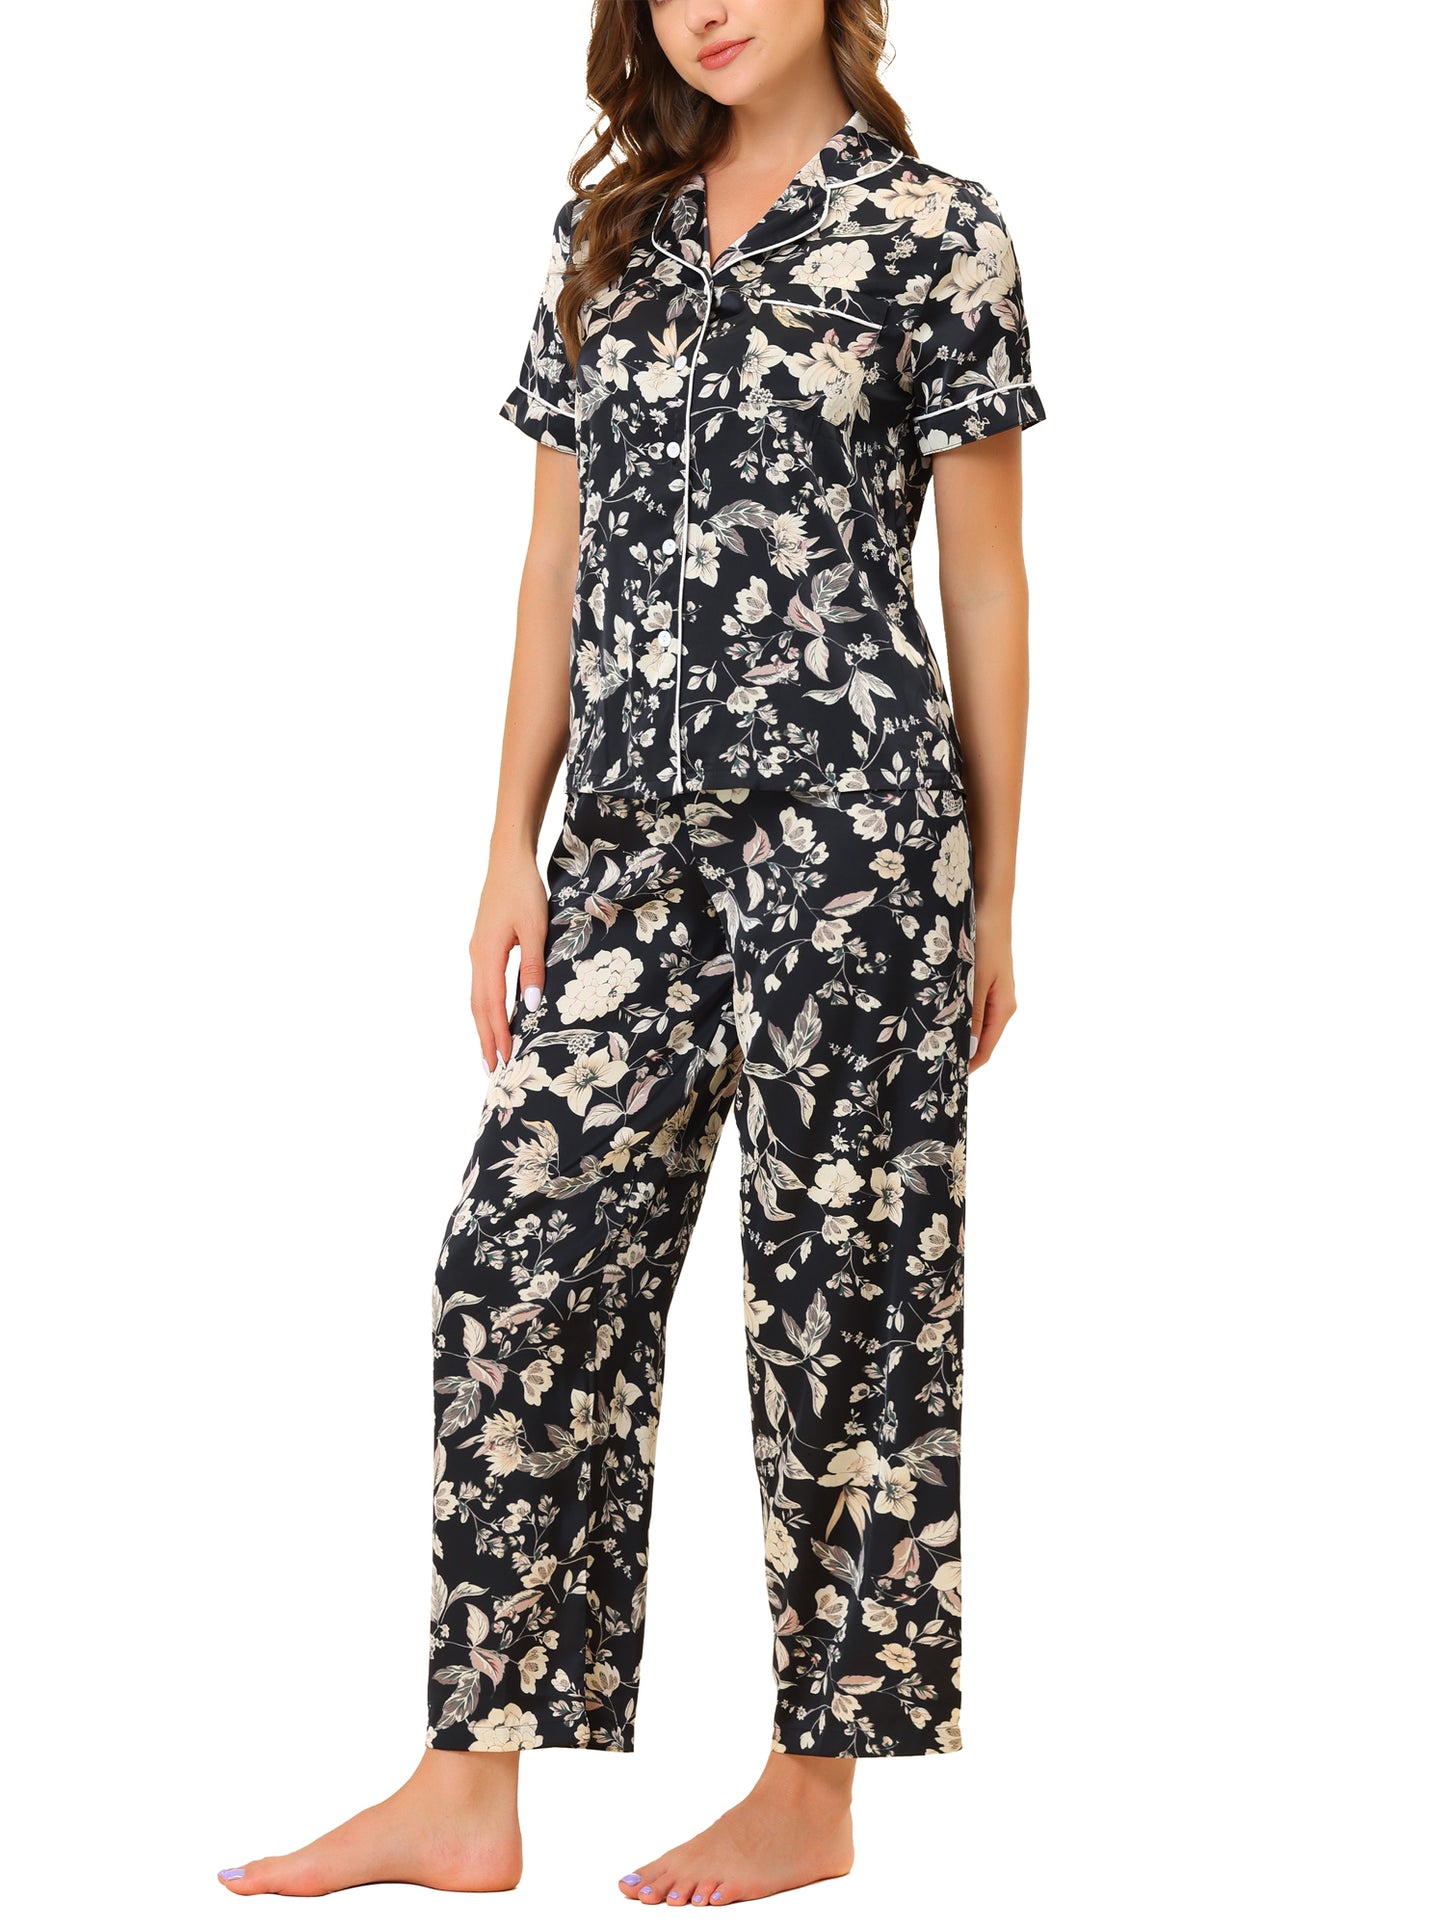 cheibear Pajama Set Silk Short Sleeves and Pants Floral Satin Sets Black-White